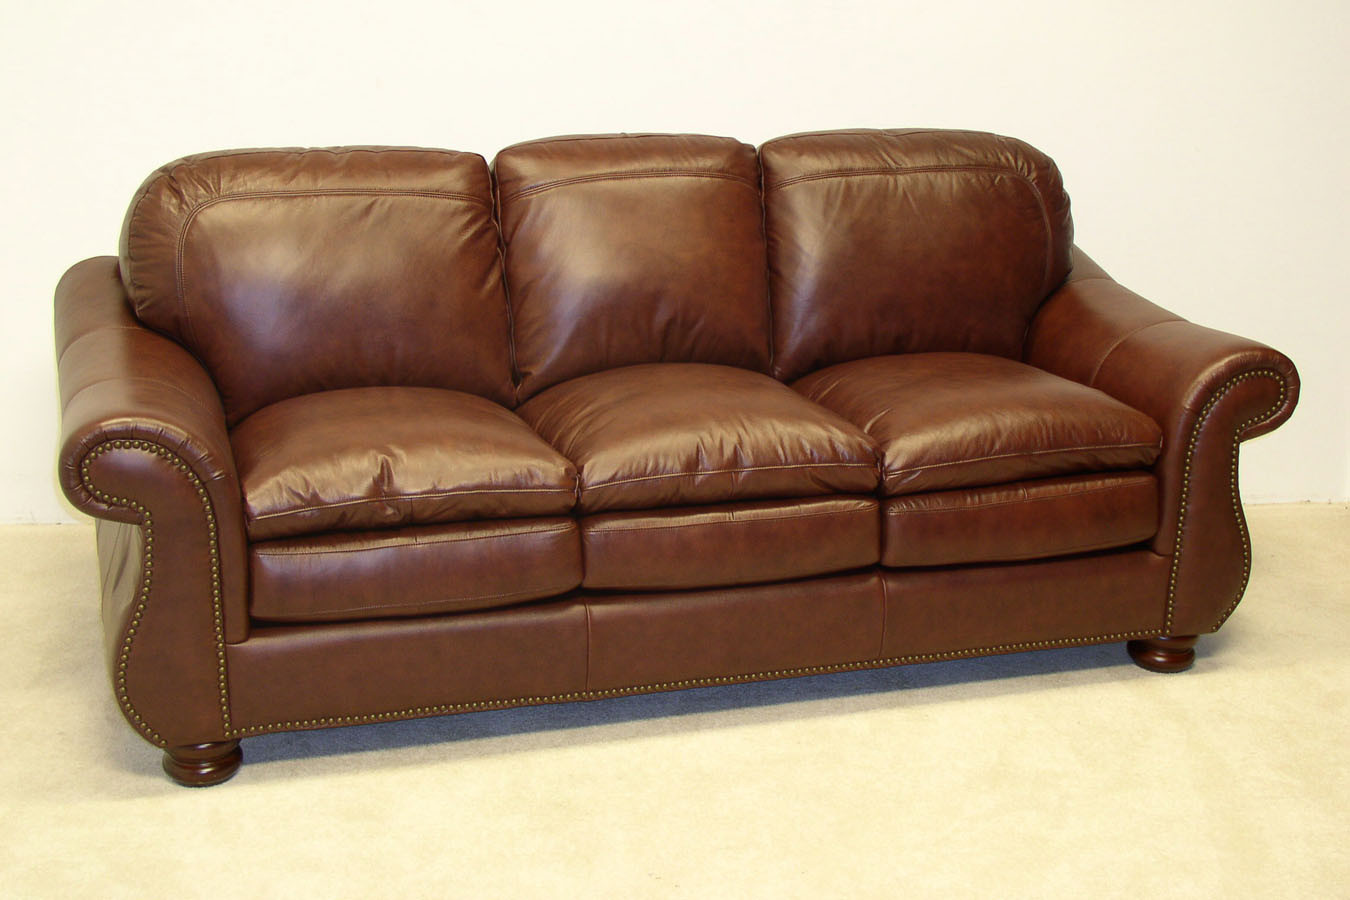 Rustic Leather Living Room Furniture
 Century Rustic Leather Living Room Set 4 pc set